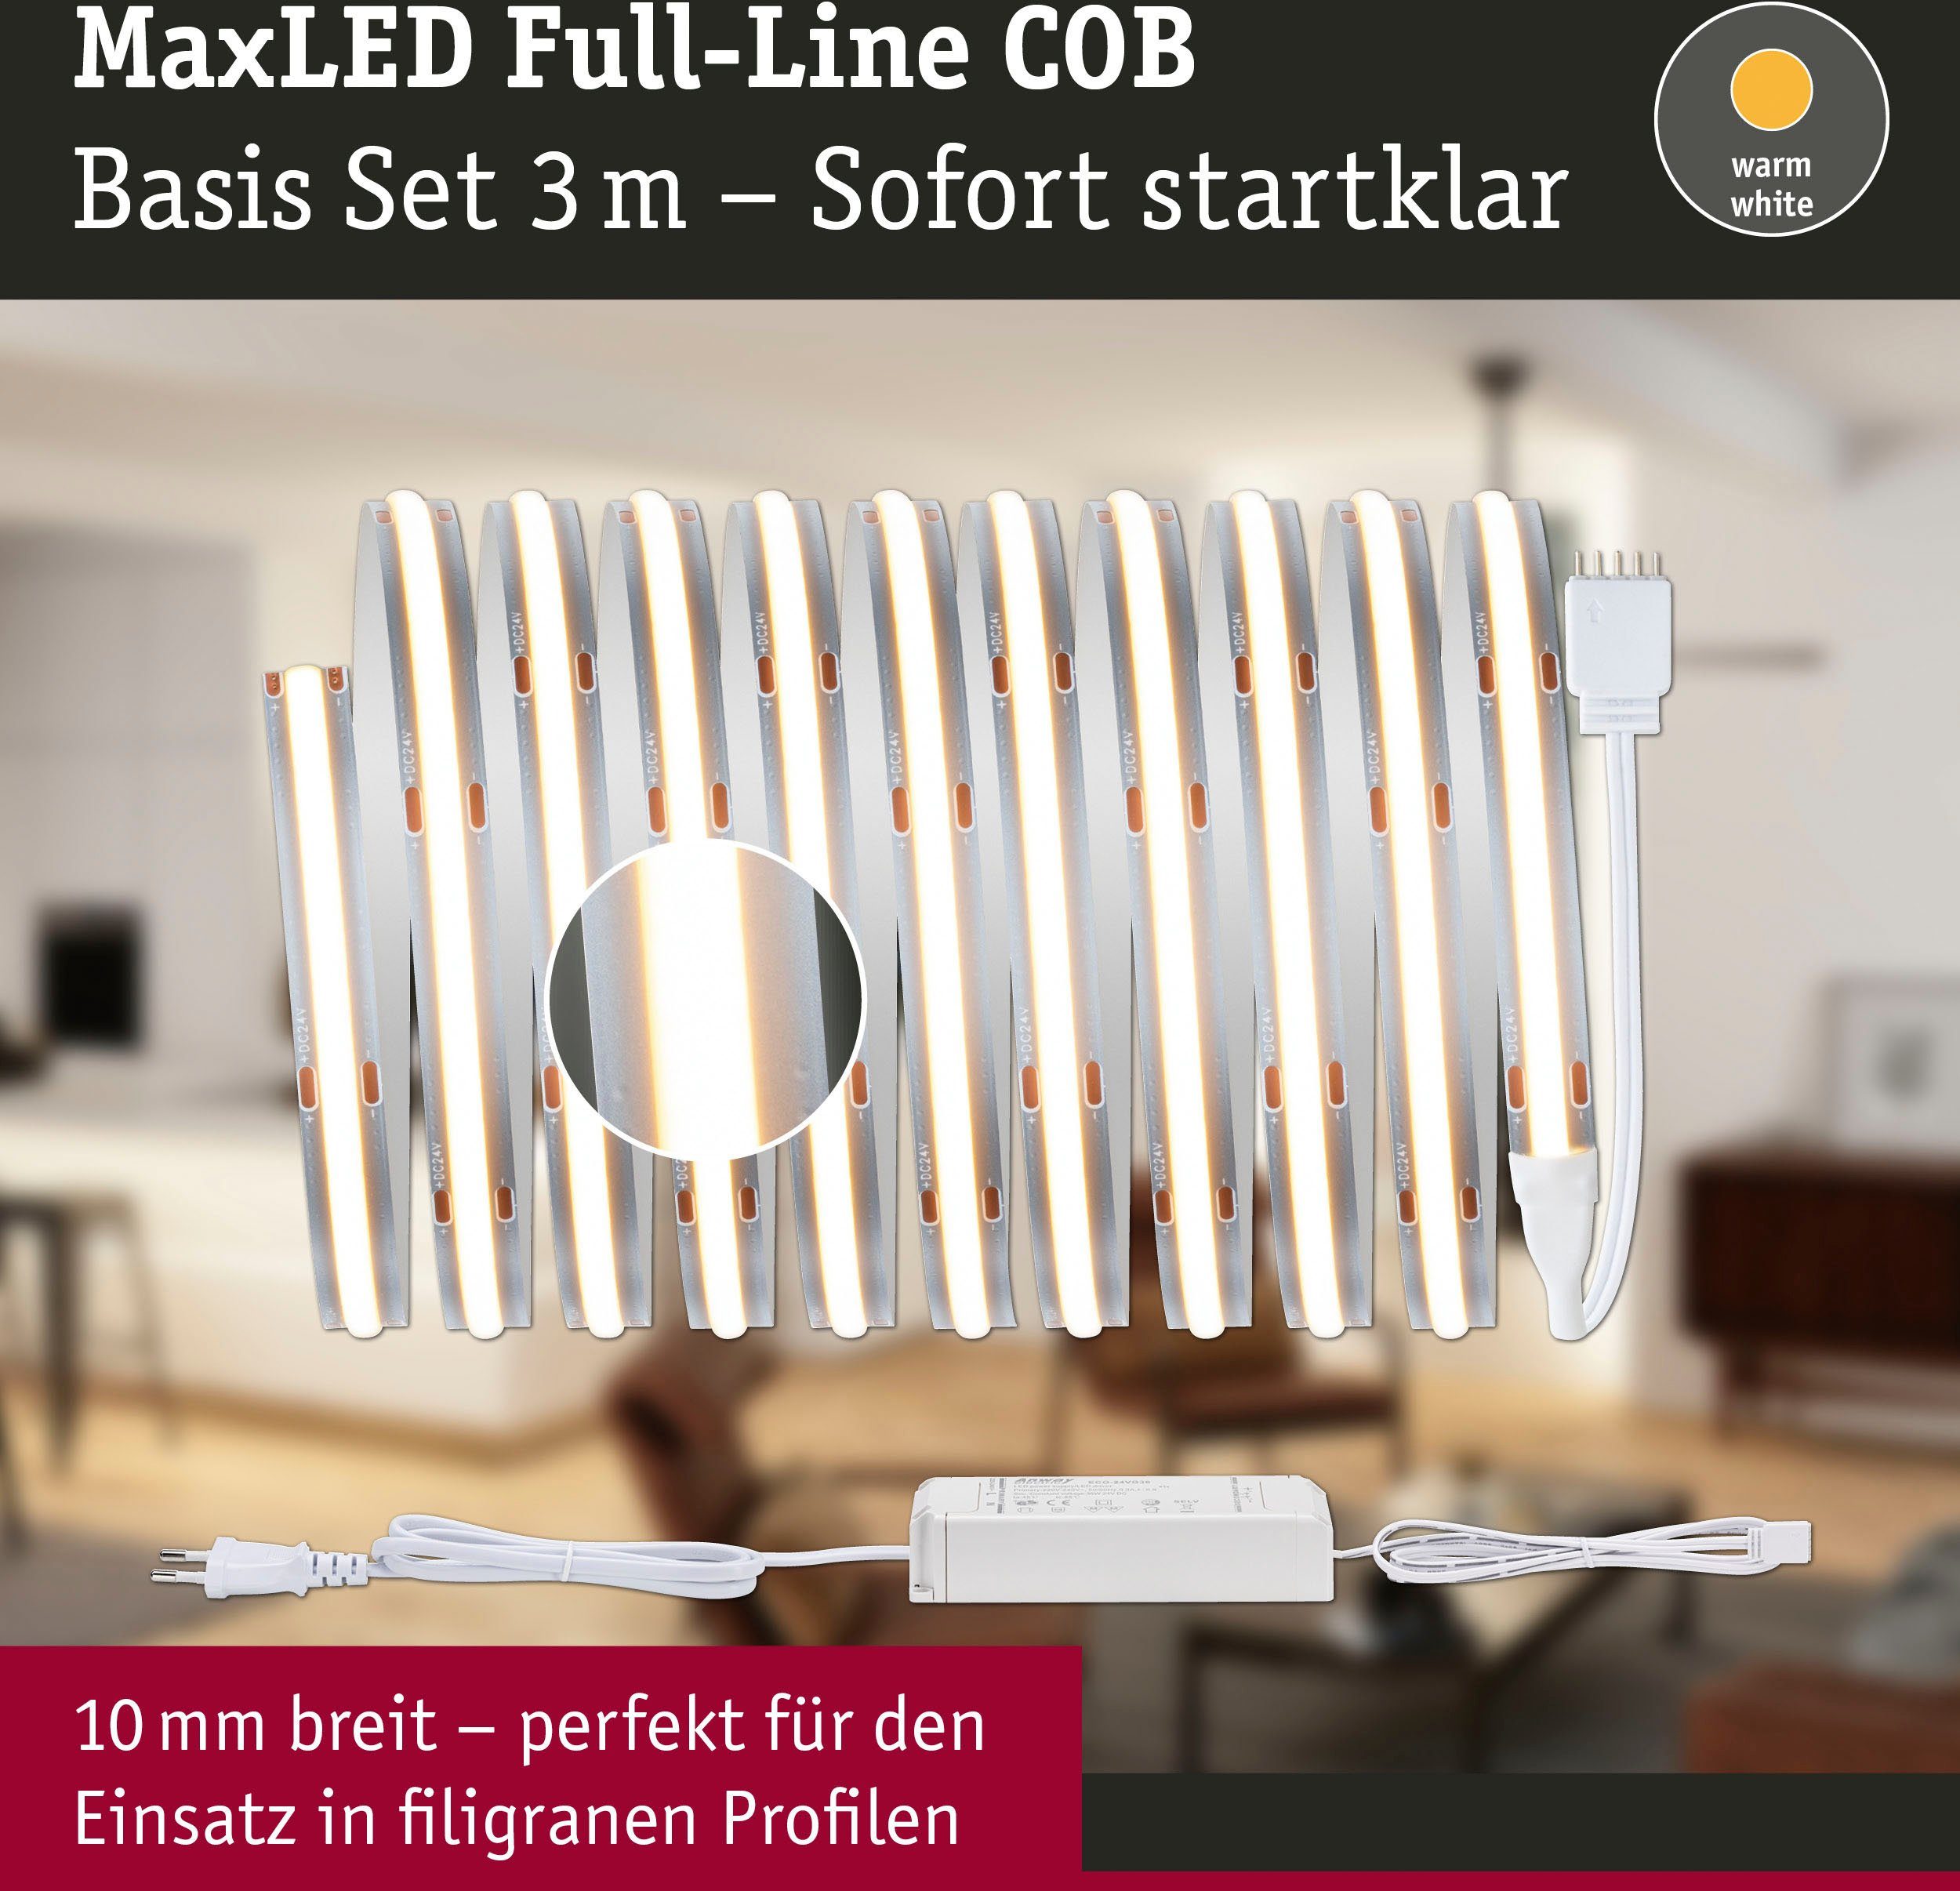 MaxLED COB 1500lm Basisset 3m 500 2700K, Paulmann 1-flammig, 19W 480LED Full-Line Basisset LED-Streifen Warmweiß